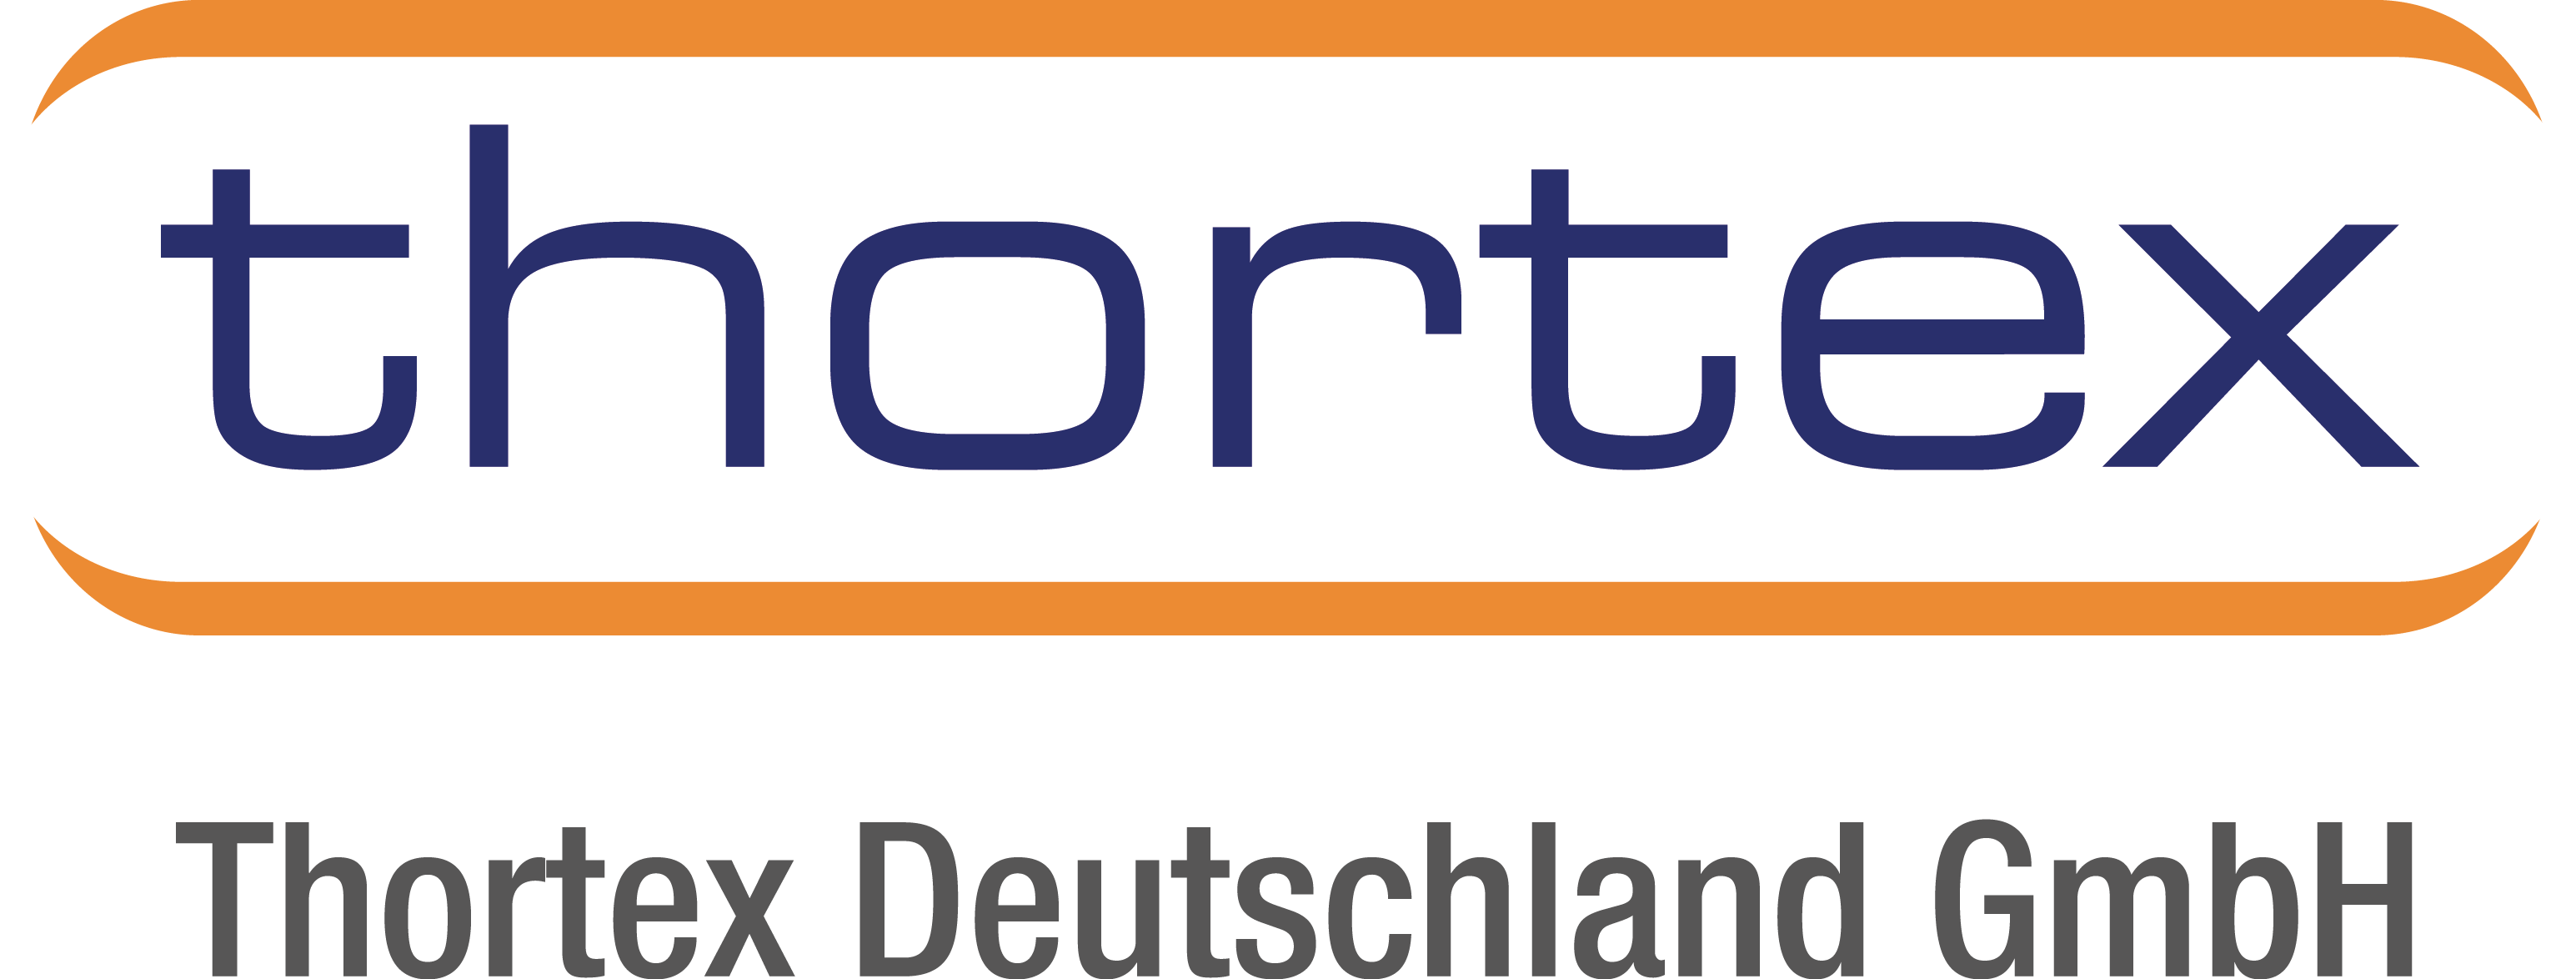 Logo Thortex DeutschlandGmbH grau